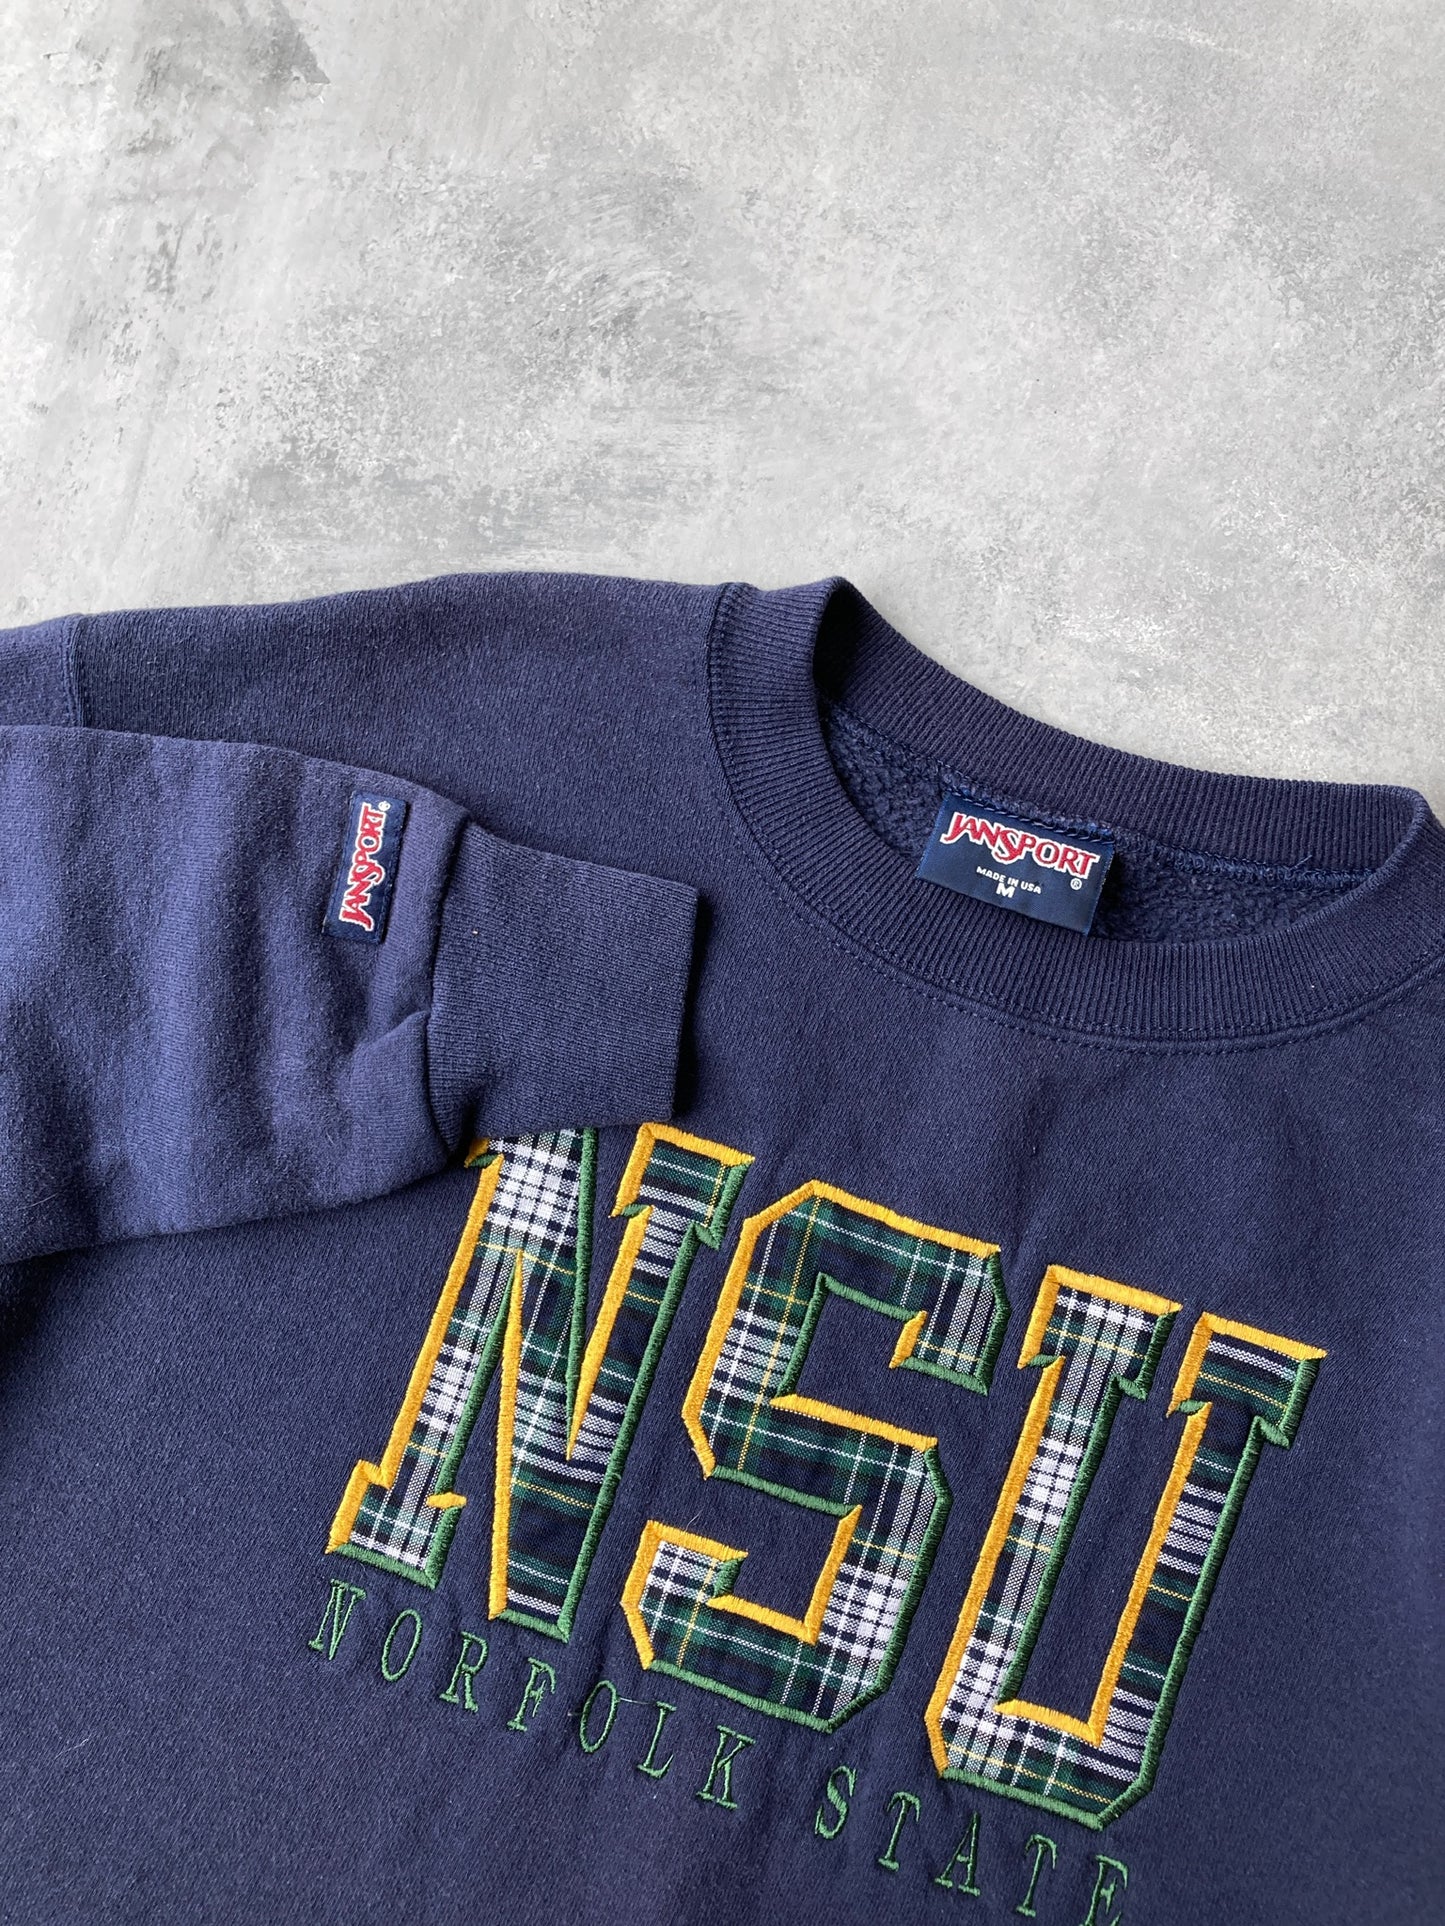 Norfolk State University Sweatshirt 90's  - Medium